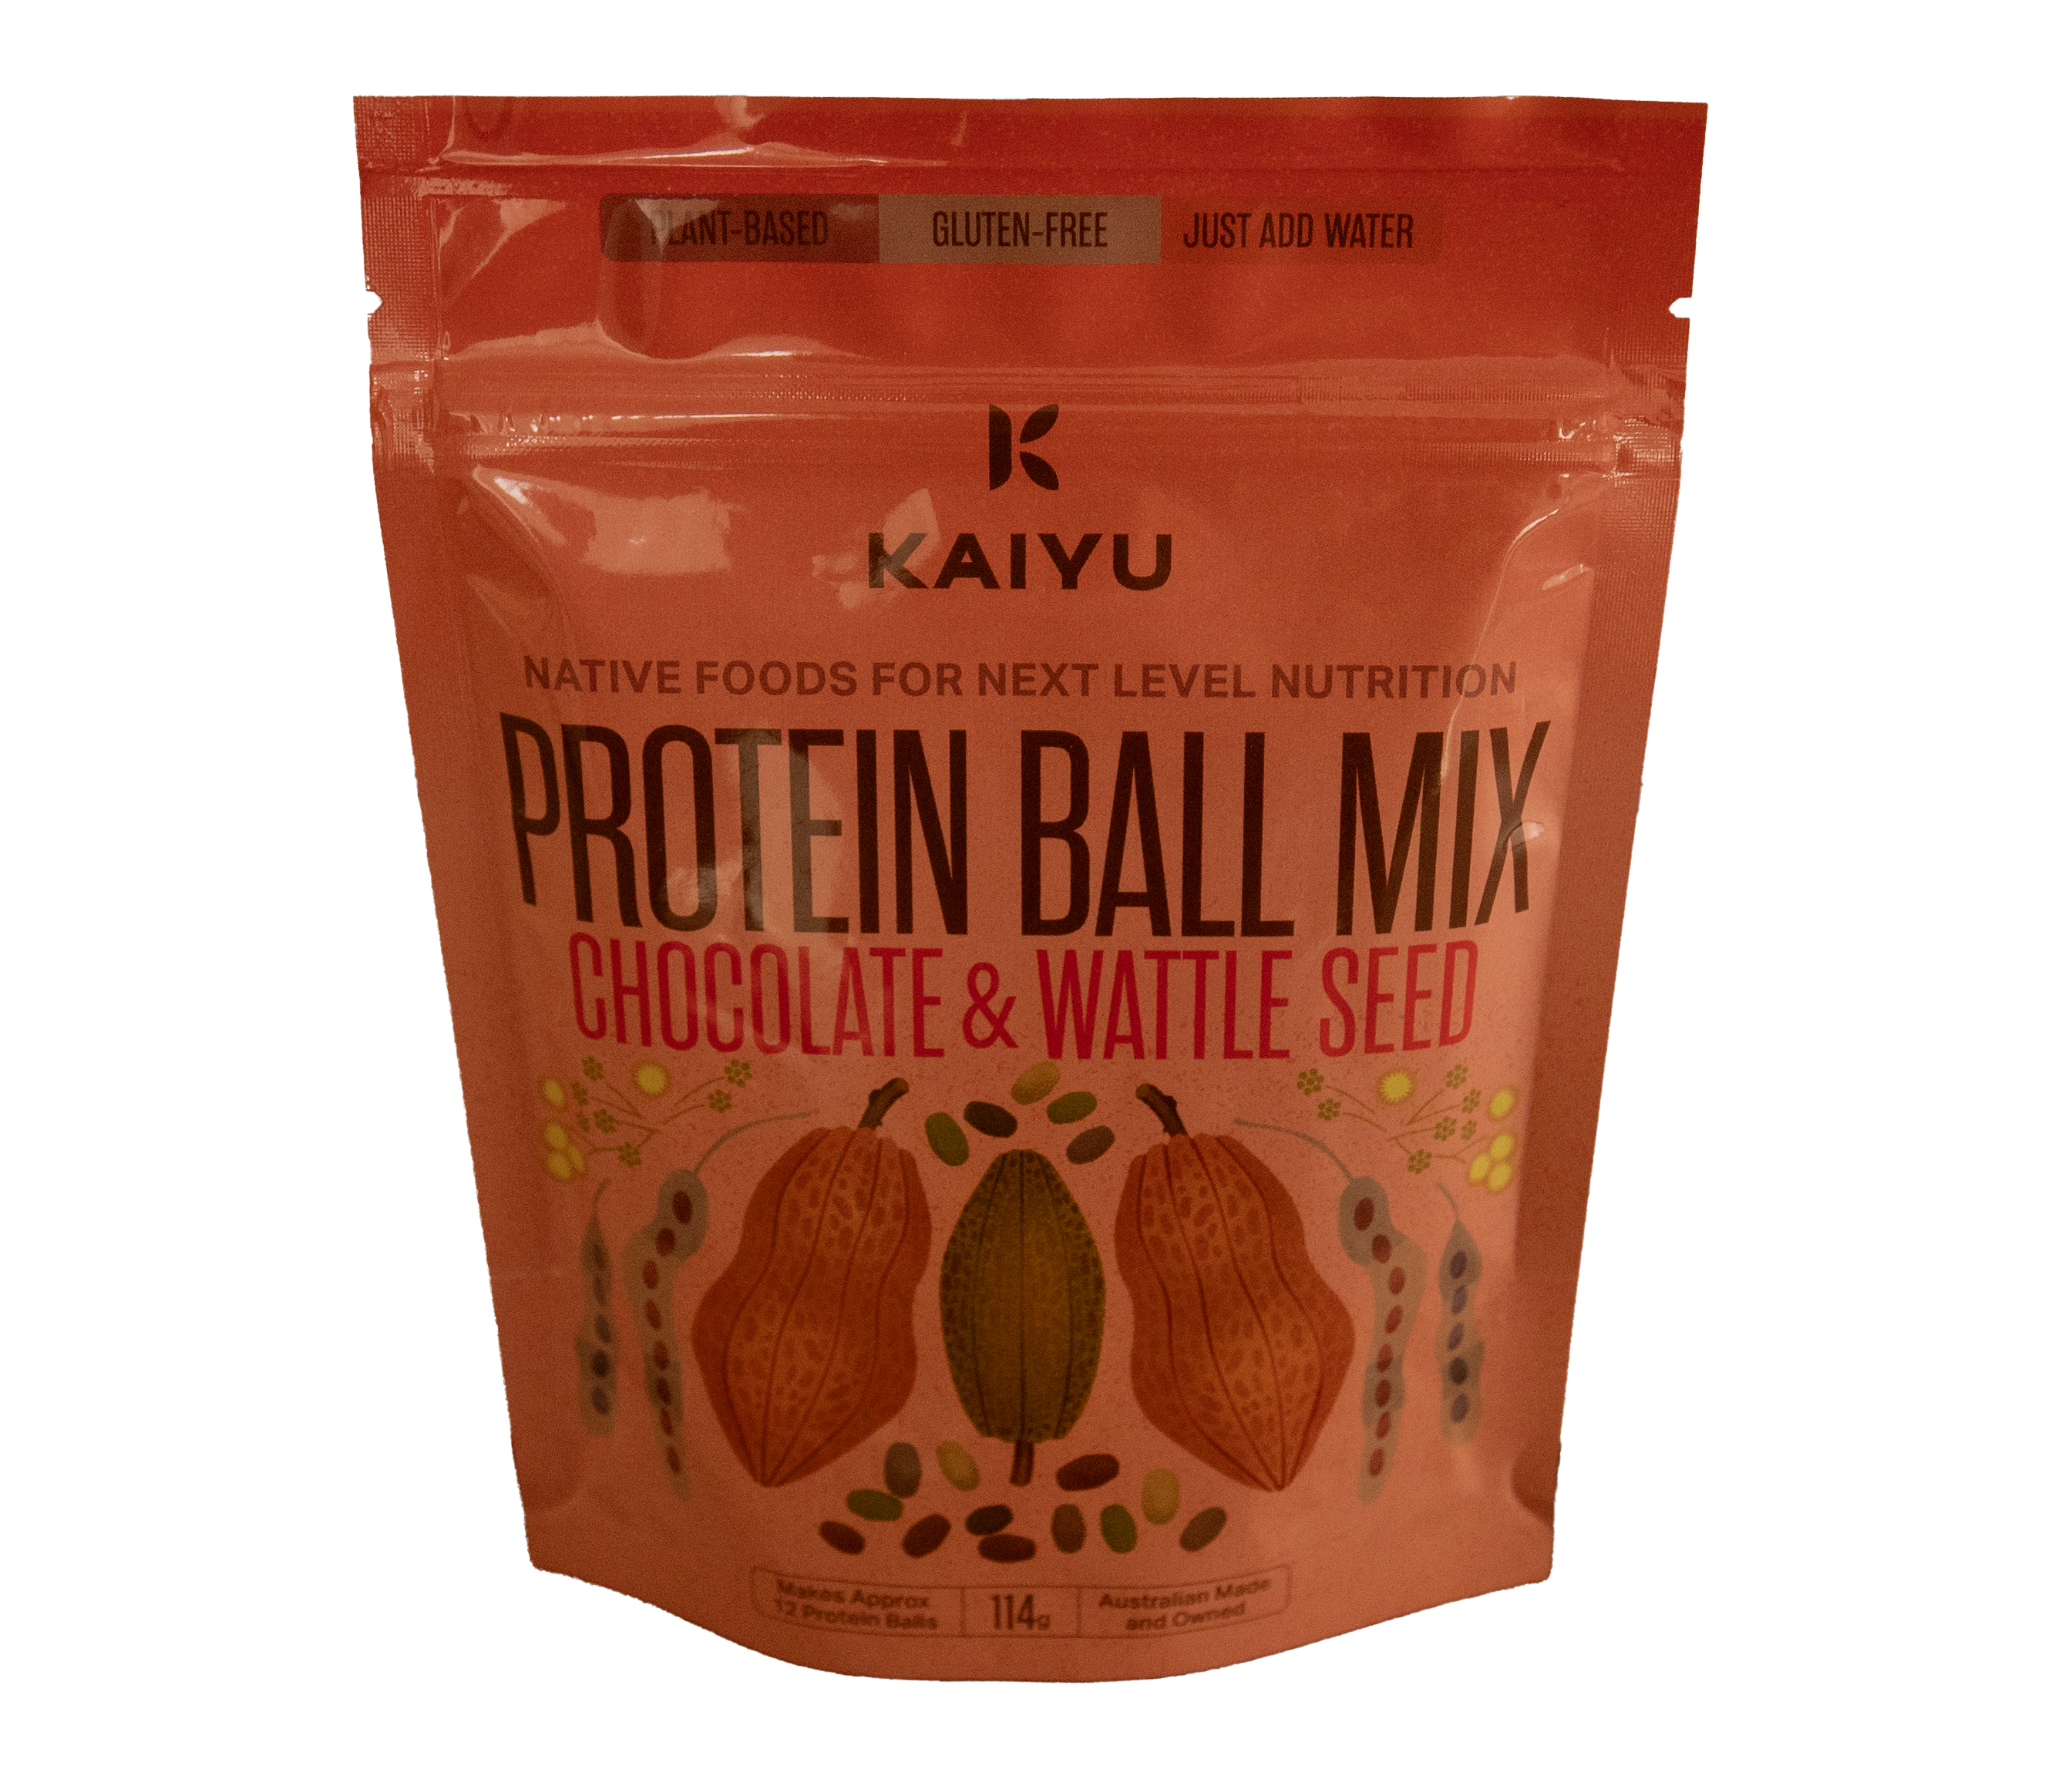 Choc wattle seed protein ball mix